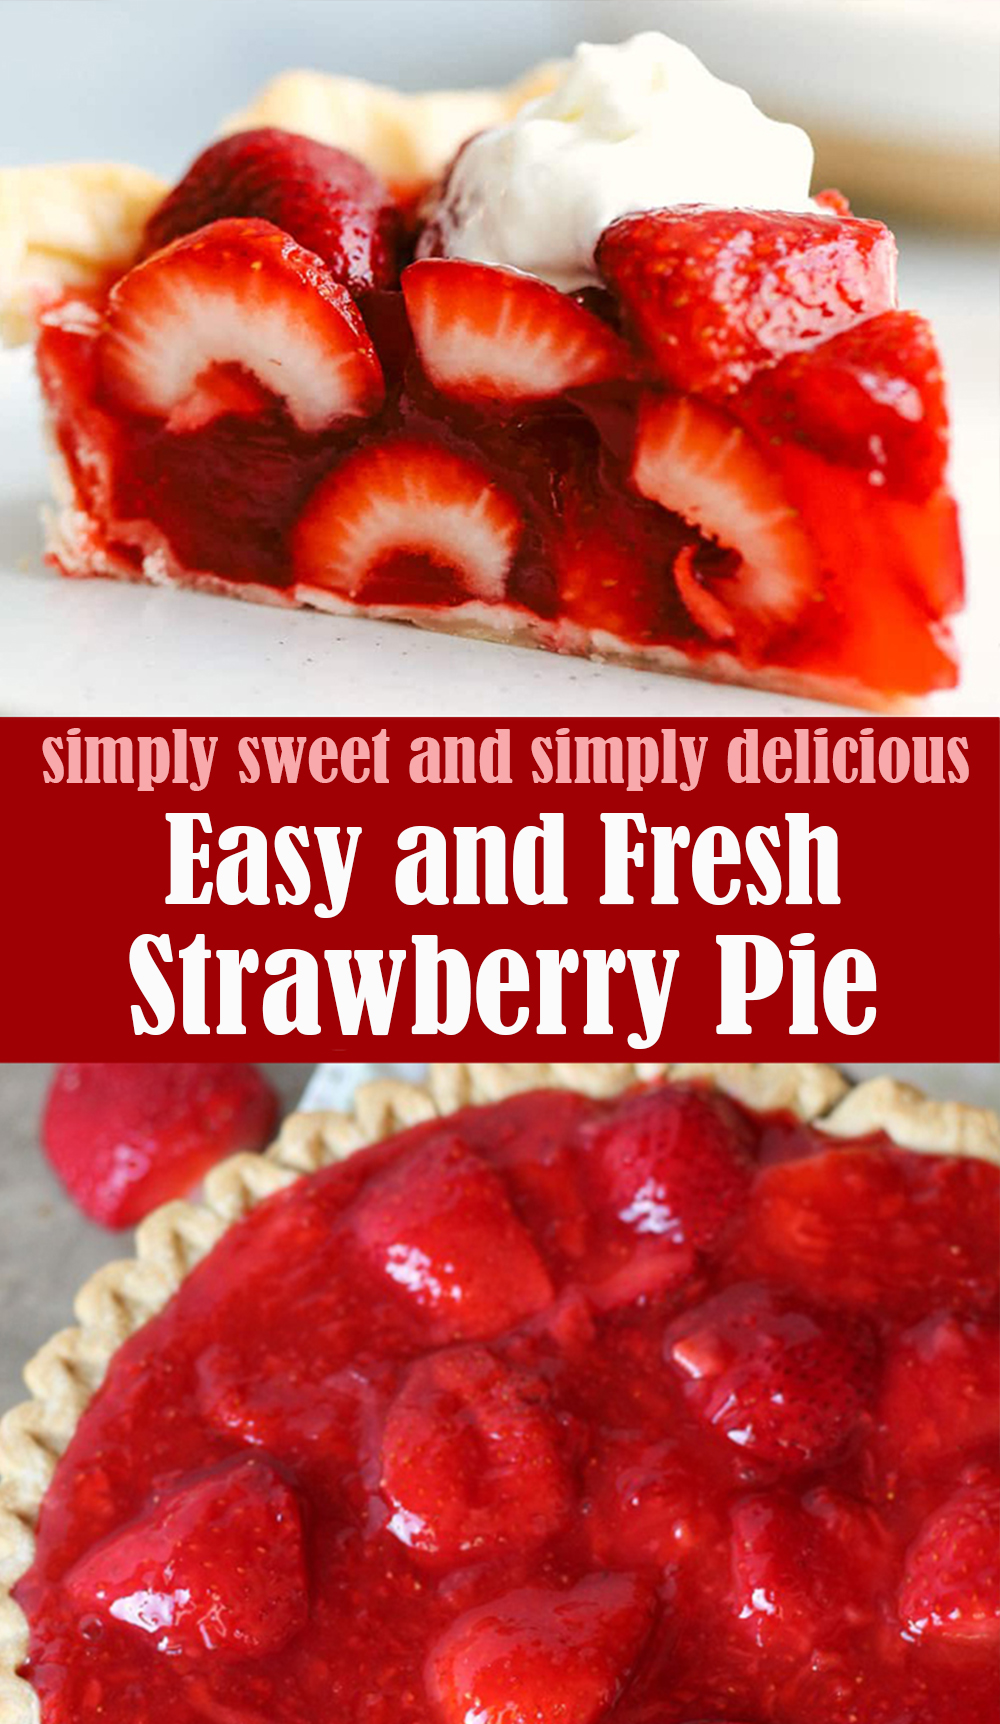 Easy and Fresh Strawberry Pie Recipe